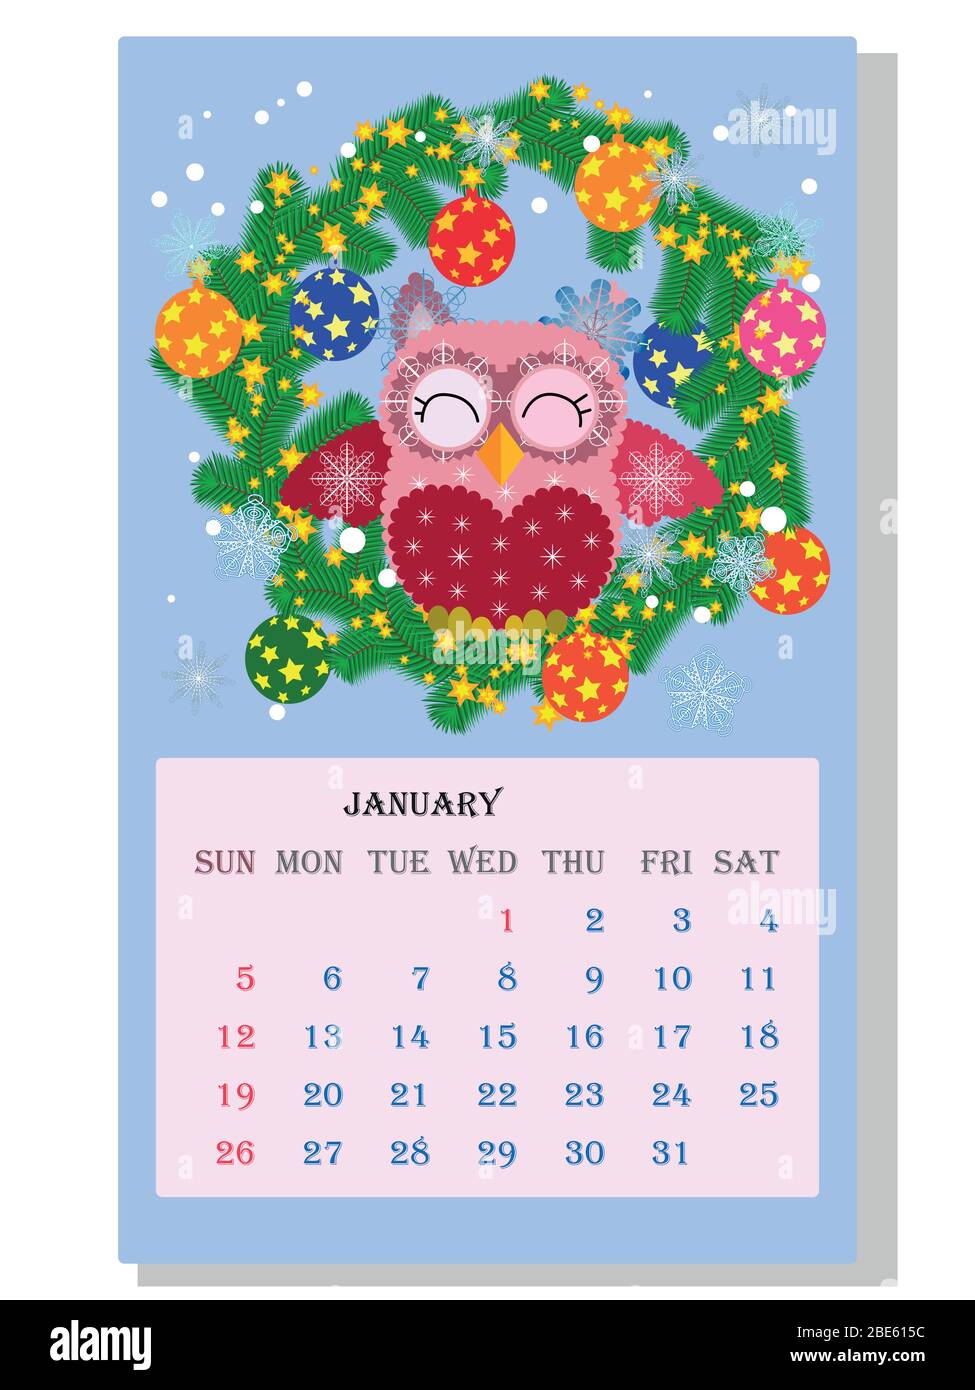 funny desk calendar 2021 Calendar 2021 Cute Calendar With Funny Cartoon Owls Stock Vector Image Art Alamy funny desk calendar 2021